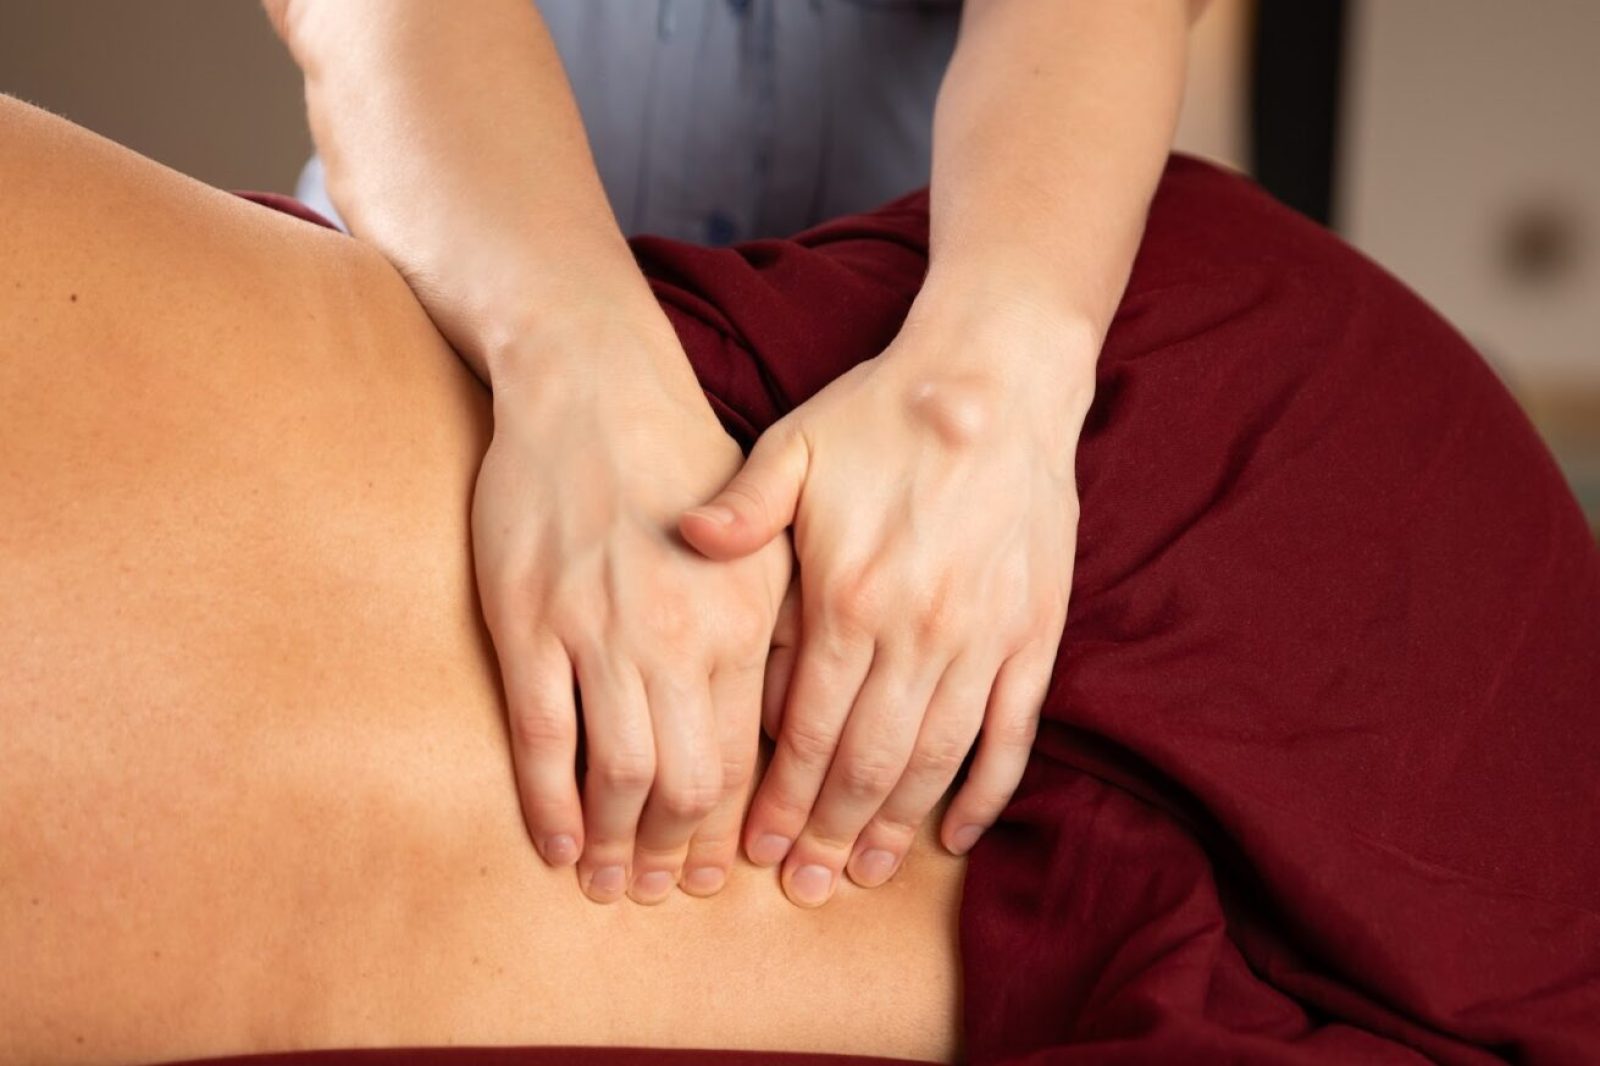 Therapeutic Massage Services